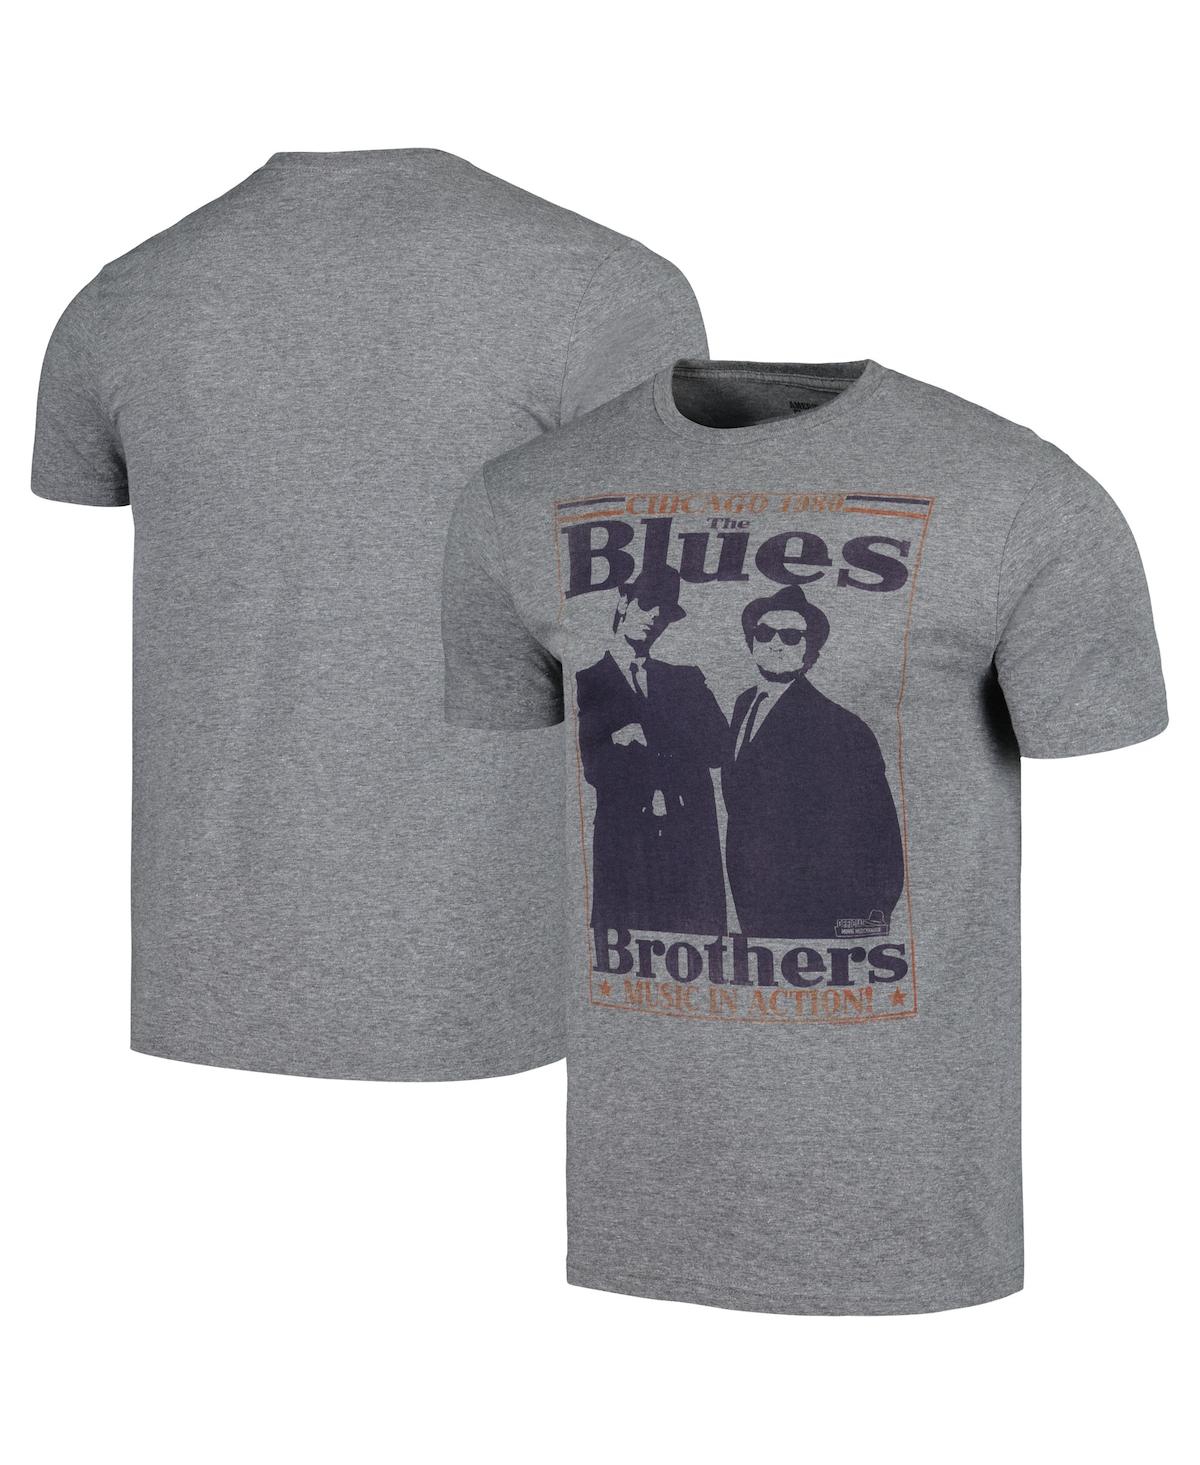 Shop American Classics Men's Heather Gray Blues Brothers World Class T-shirt